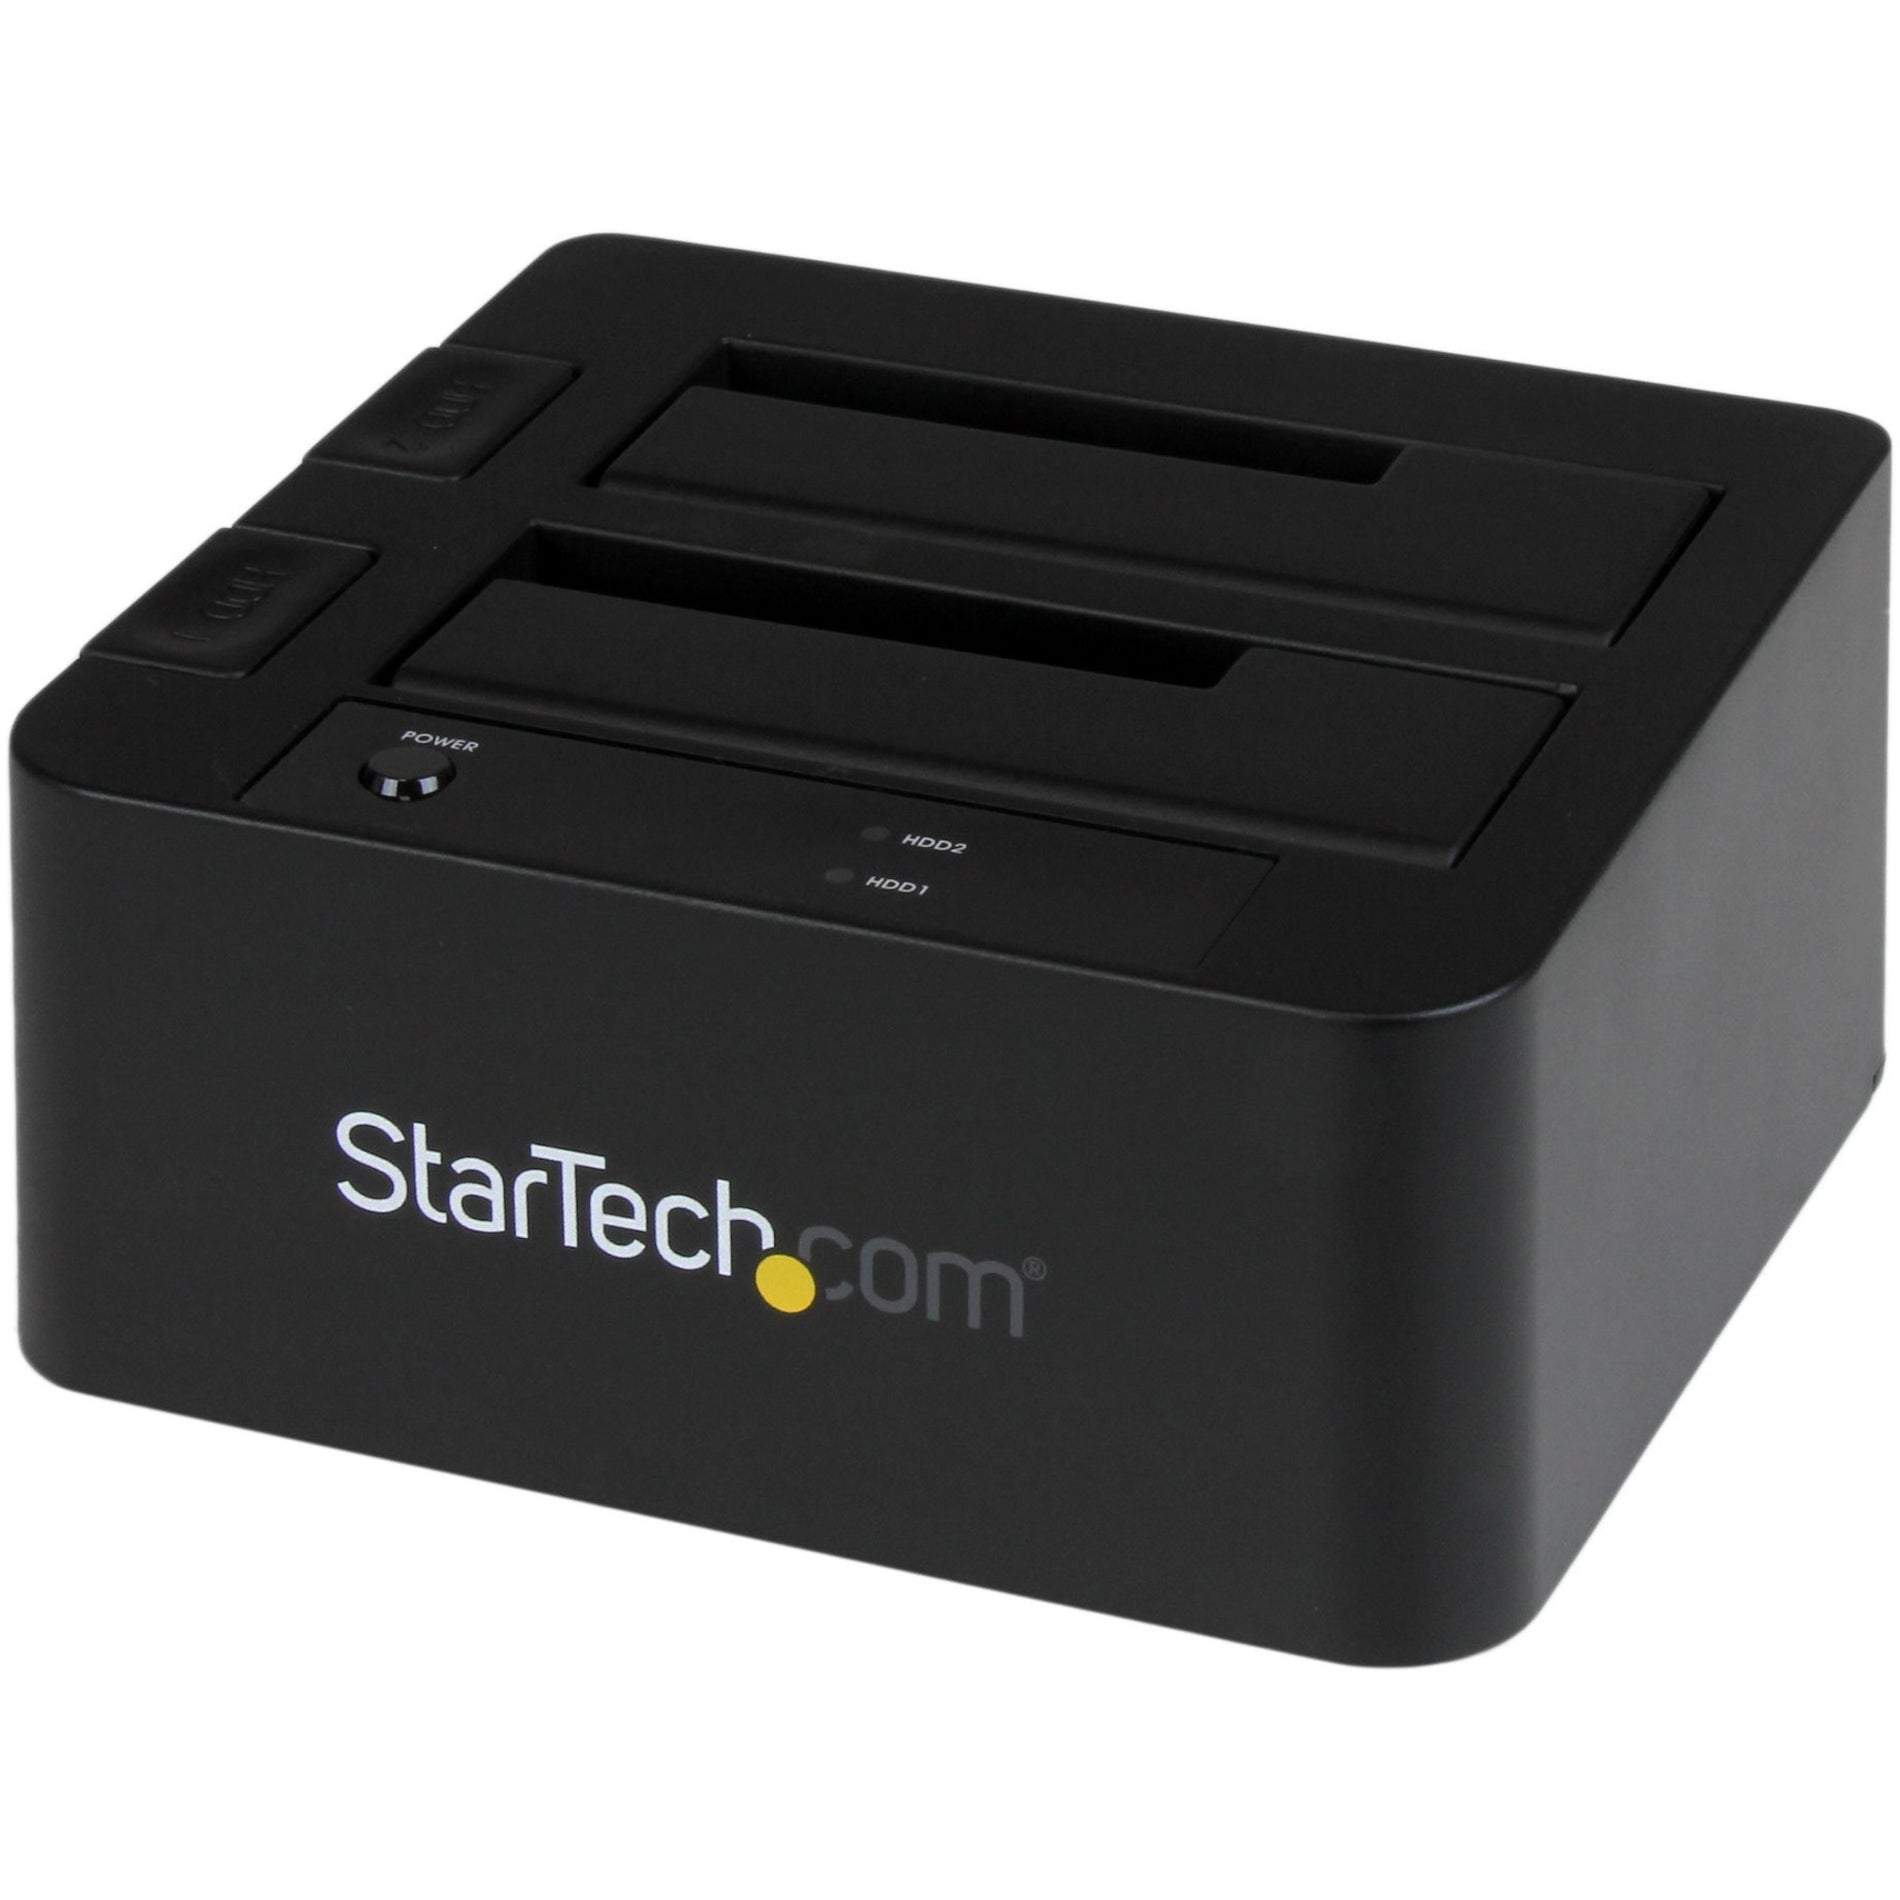 StarTech.com SDOCK2U33EB USB 3.0/ESATA Dual HDD/SSD Dock with UASP, Fast Data Transfer and Easy Hard Drive Access